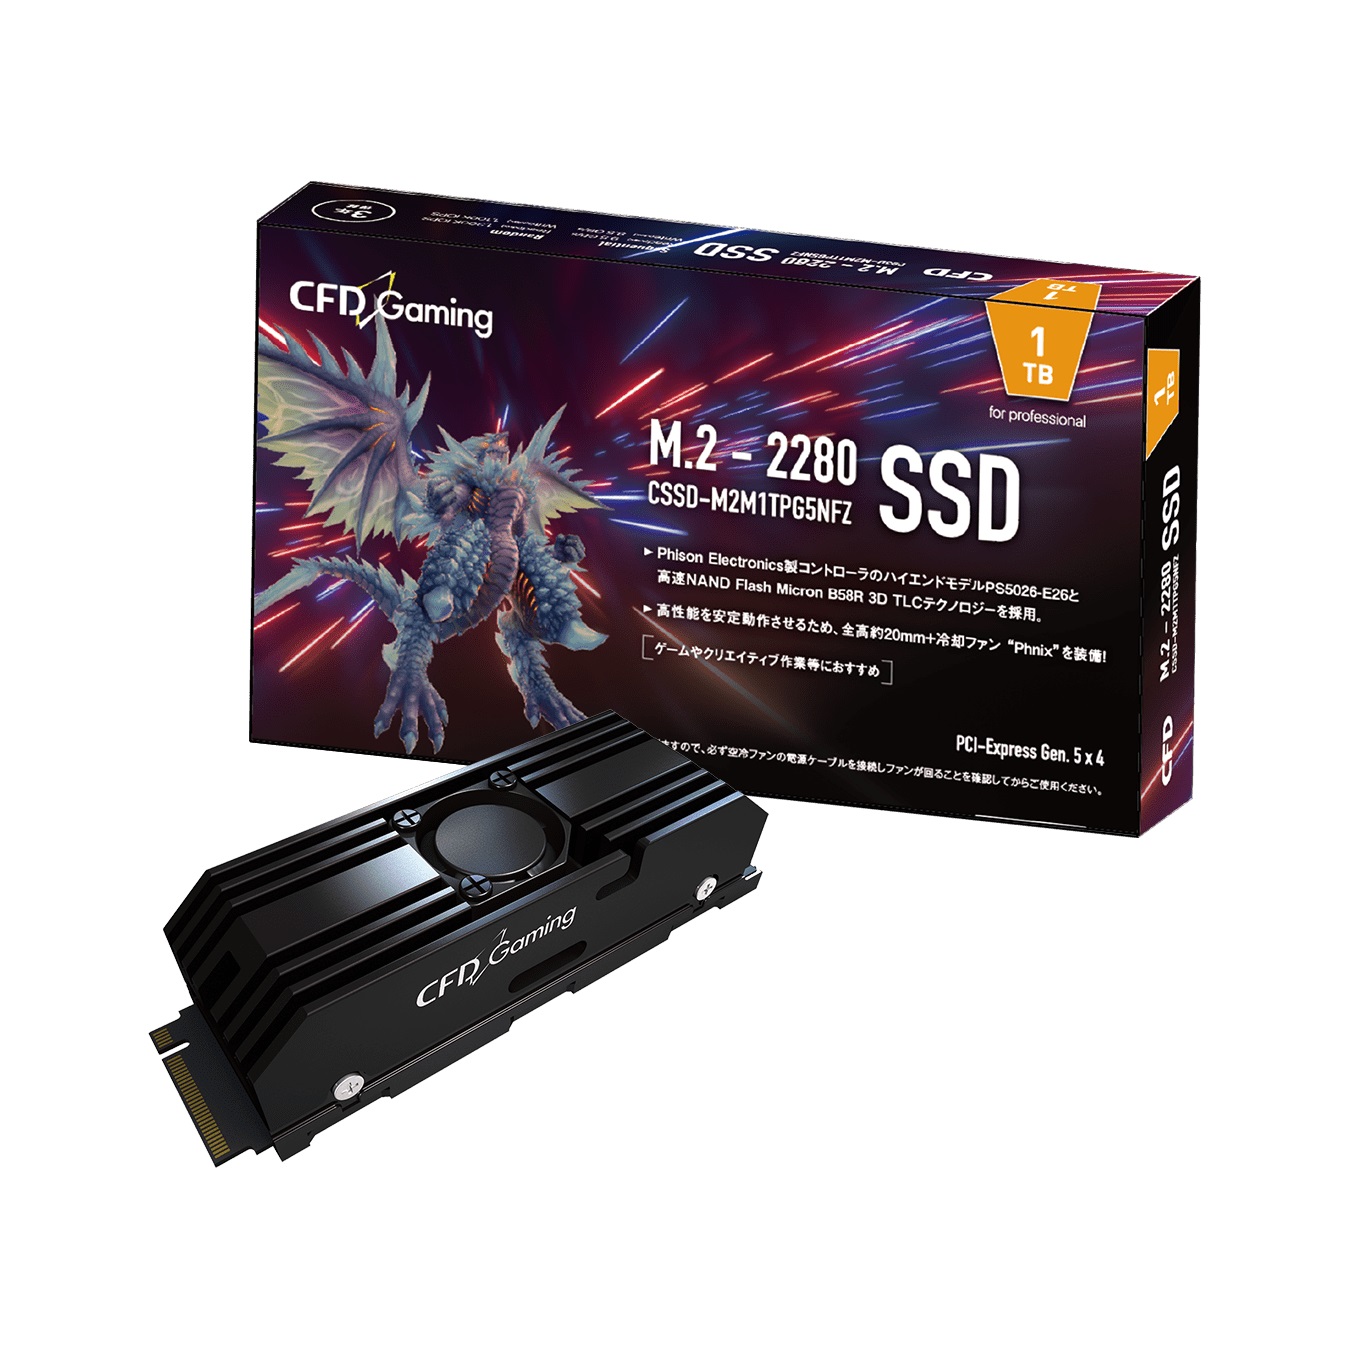 CFD Gaming SSD PCIe 5.0